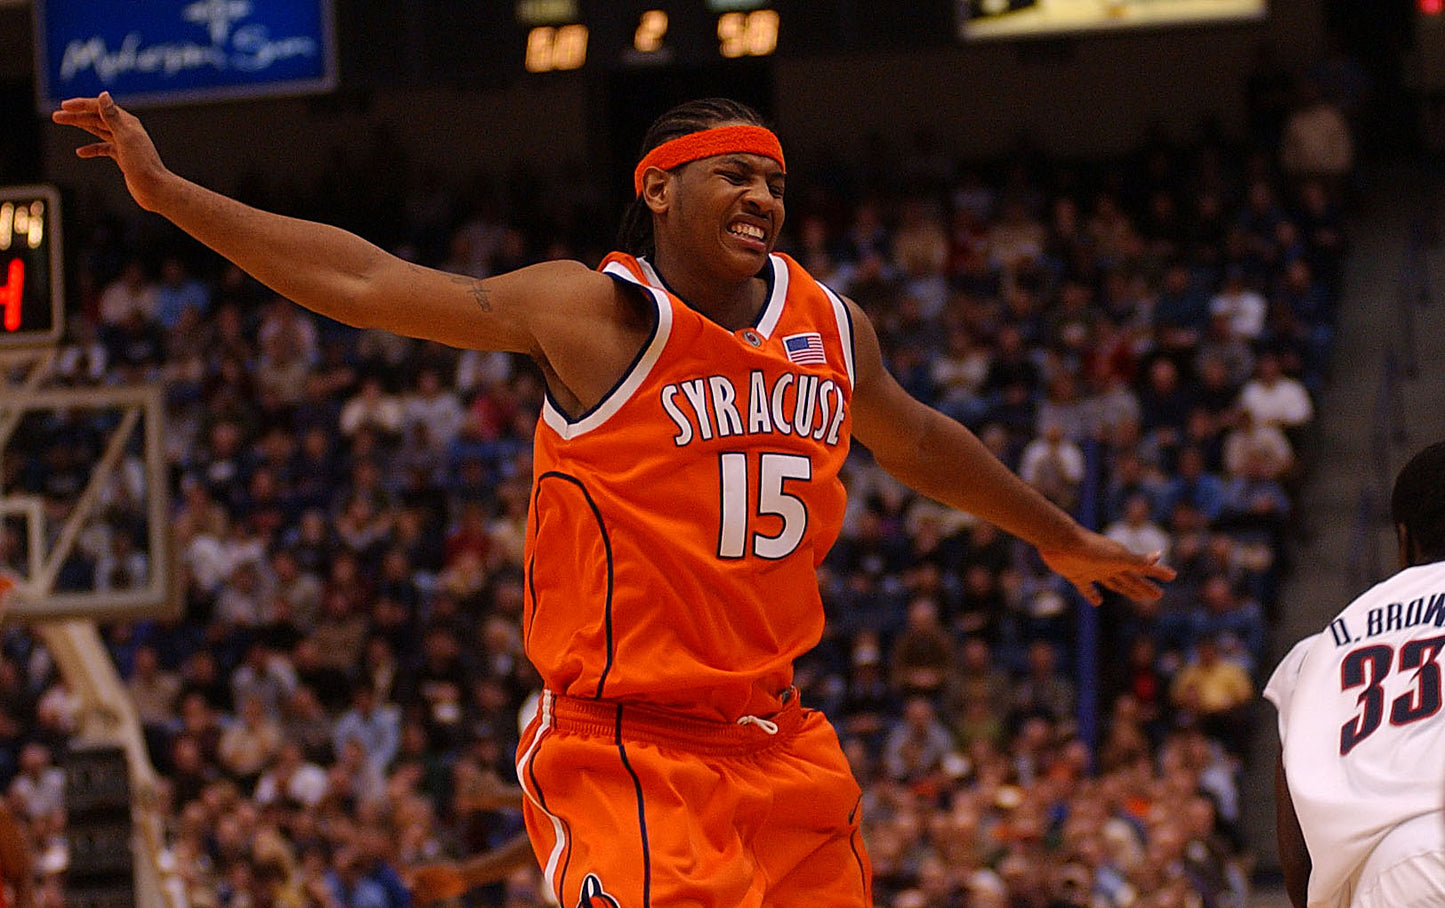 Carmelo Anthony Syracuse Orange 2003 NCAA Campus Legend College Basketball Jersey